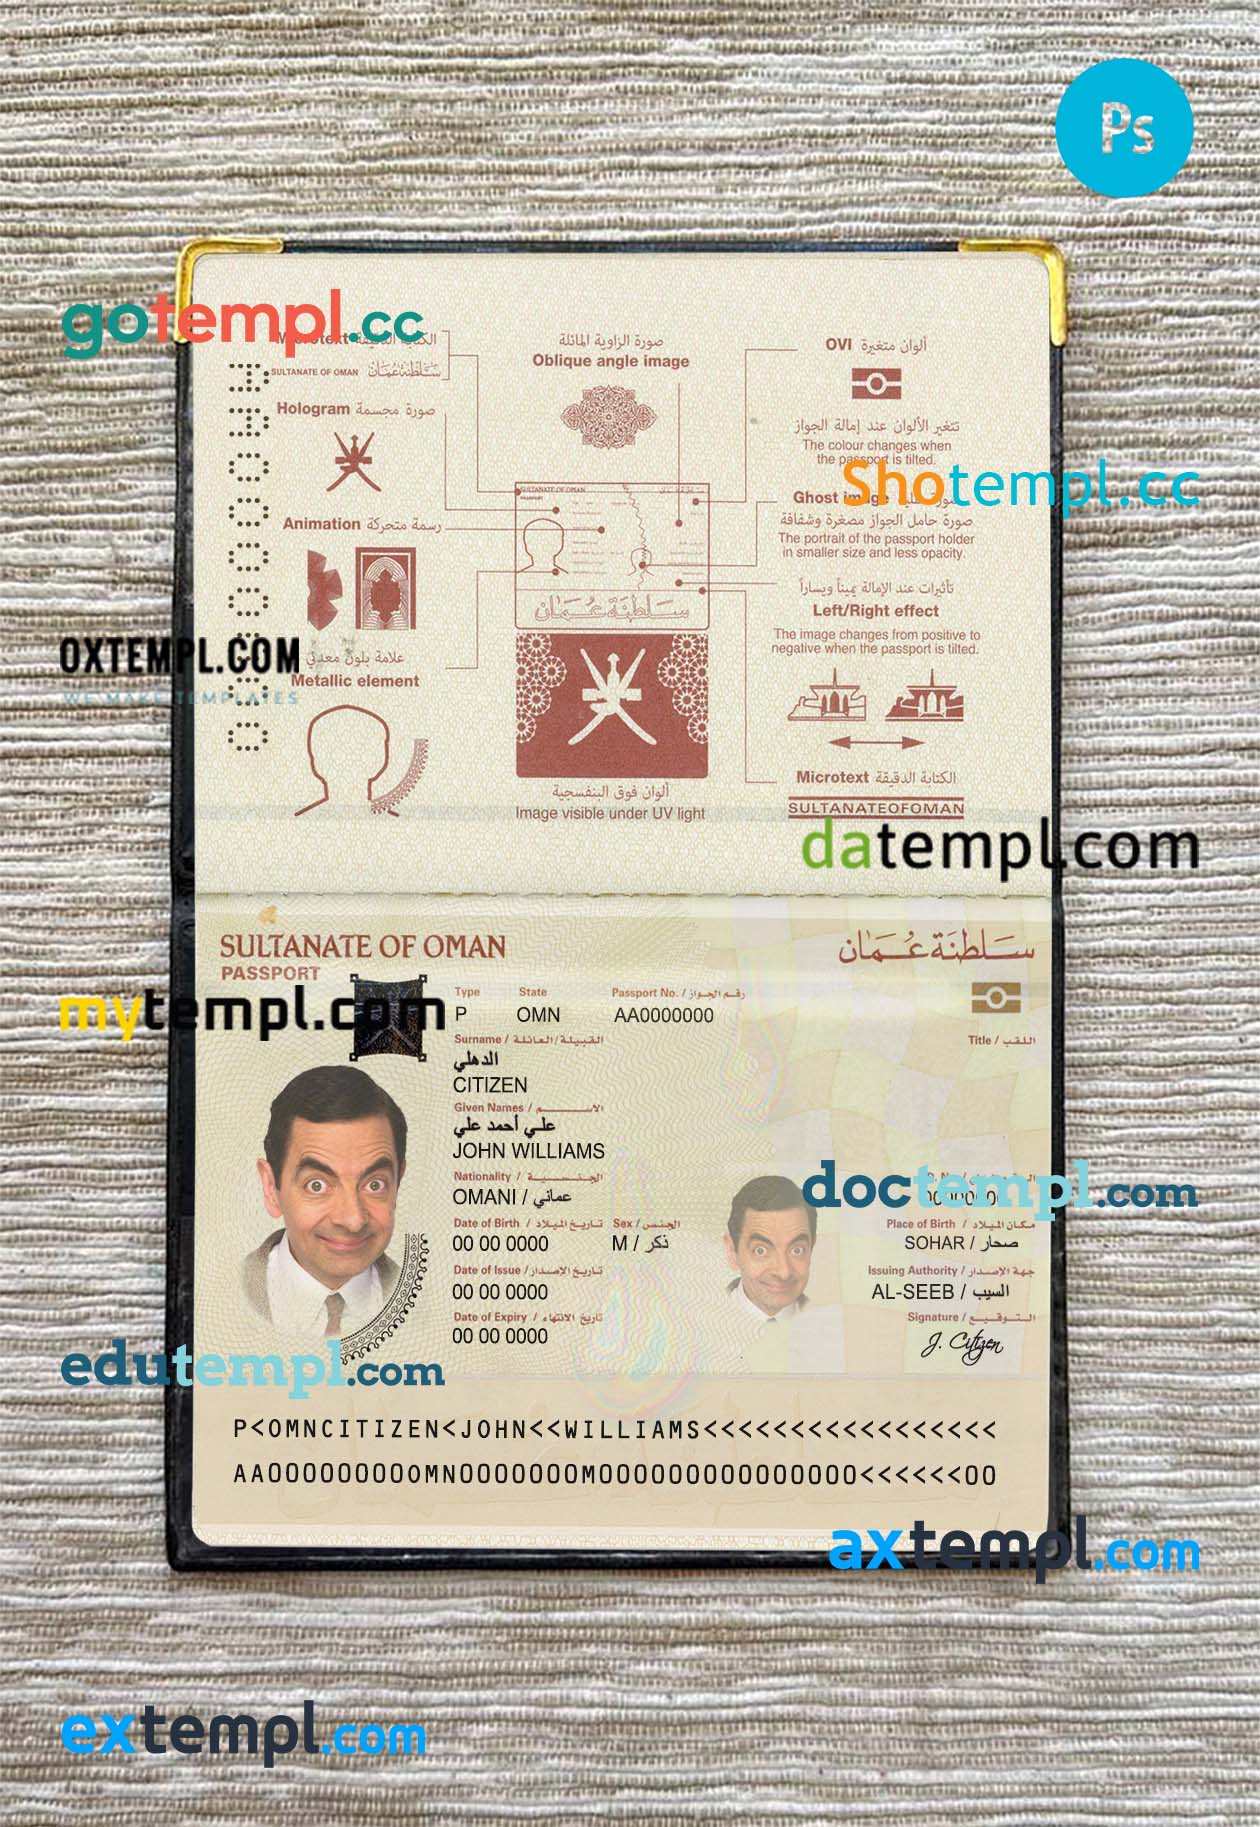 Mexico Inbursa bank visa classic card, fully editable template in PSD format